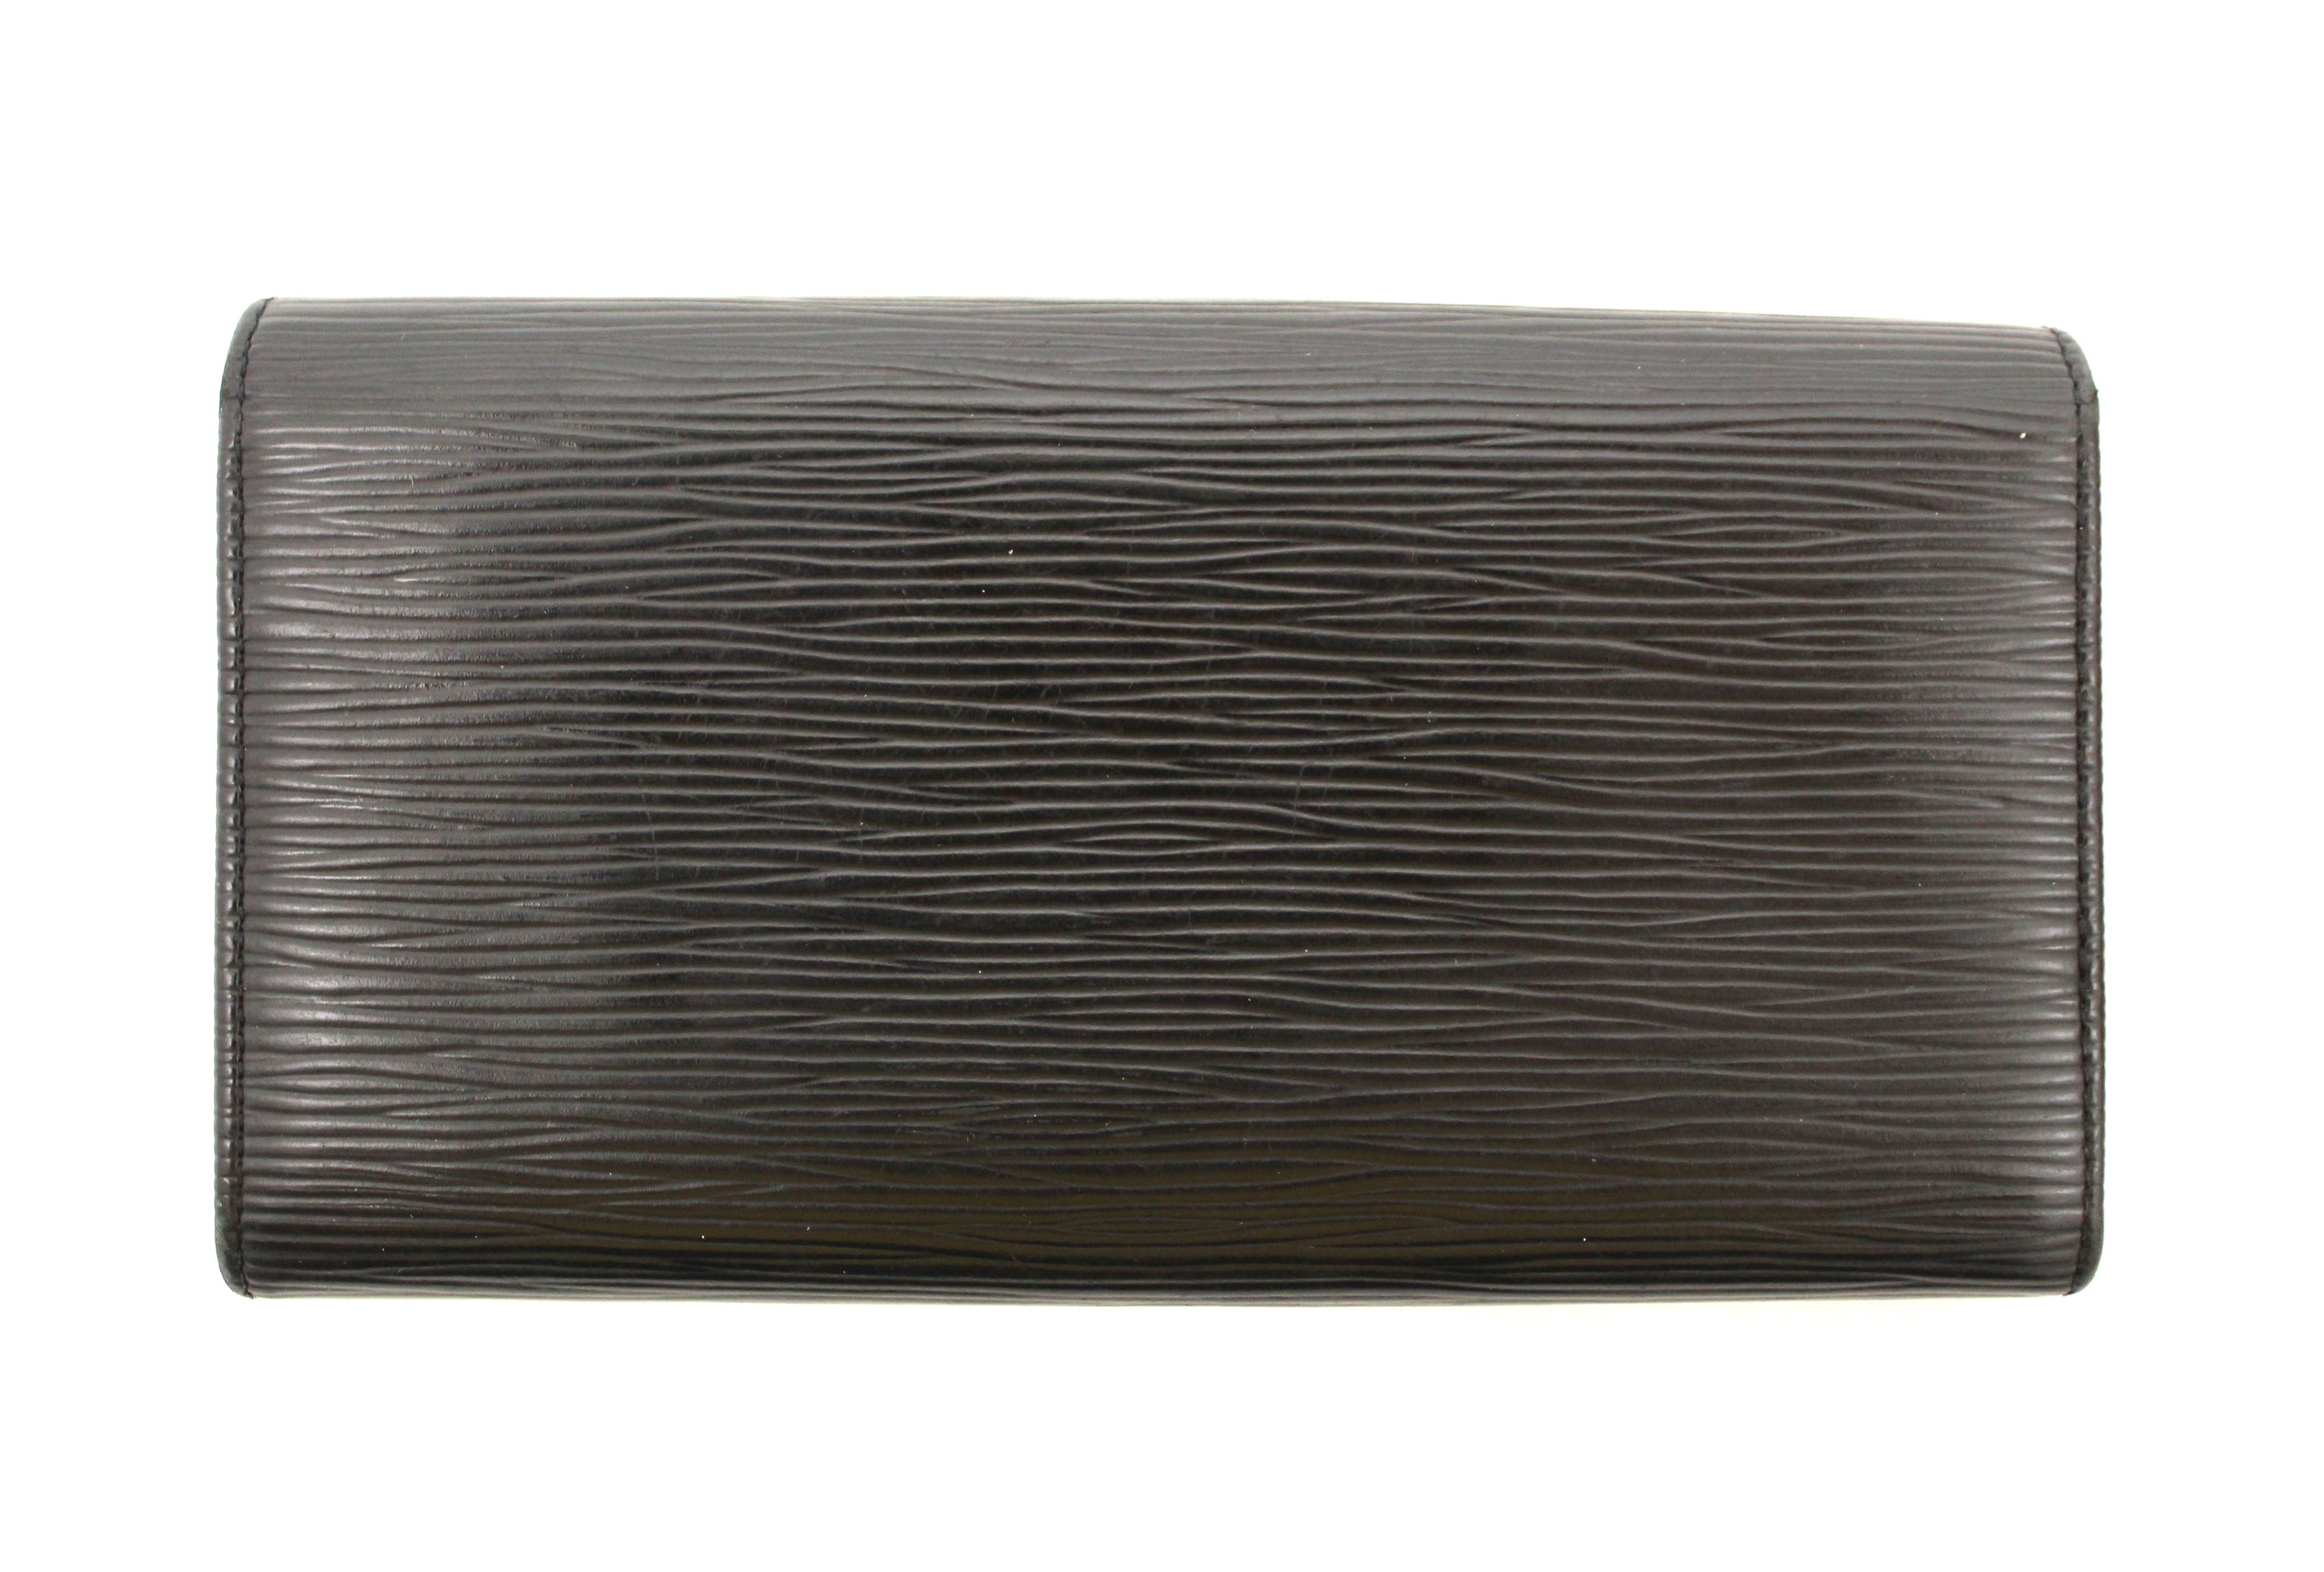 Louis Vuitton Black Epi Leather Long Wallet